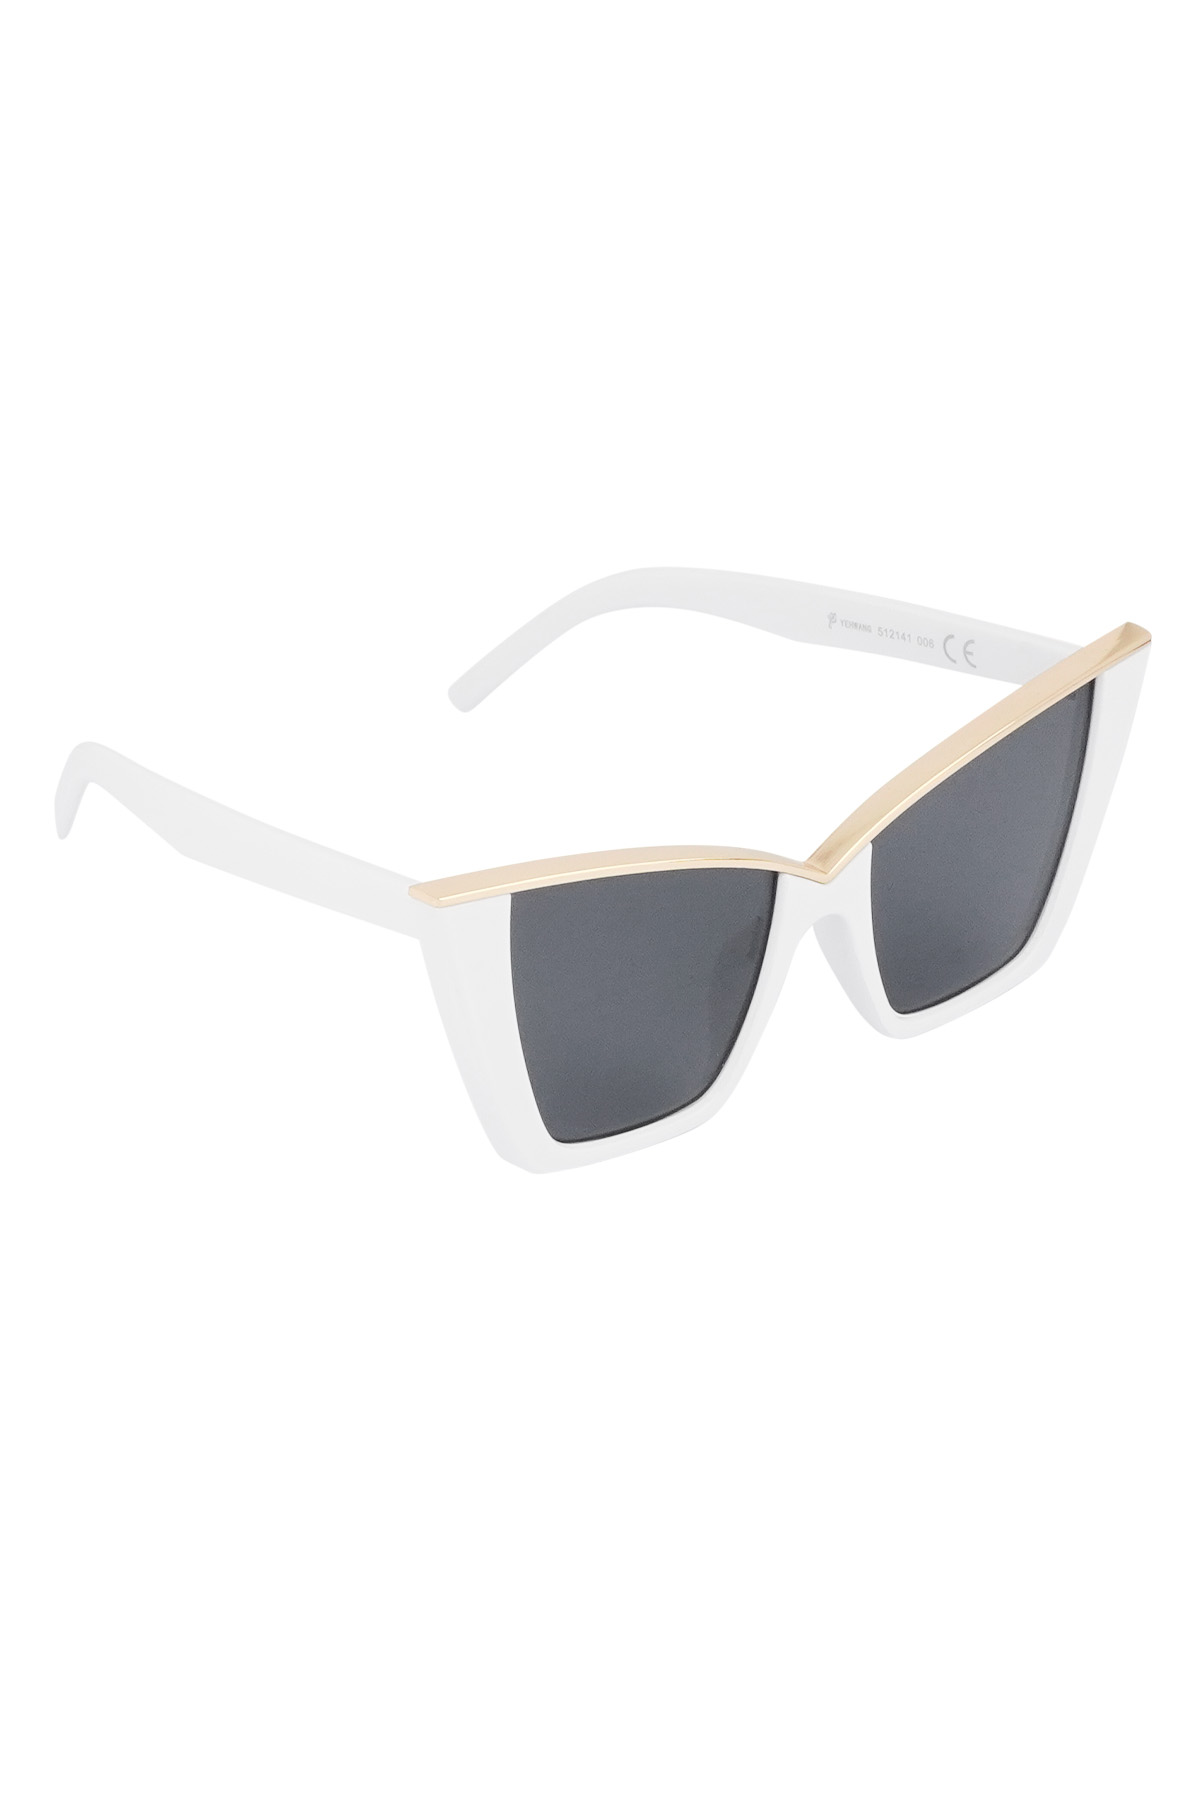 Chic sunglasses - white 